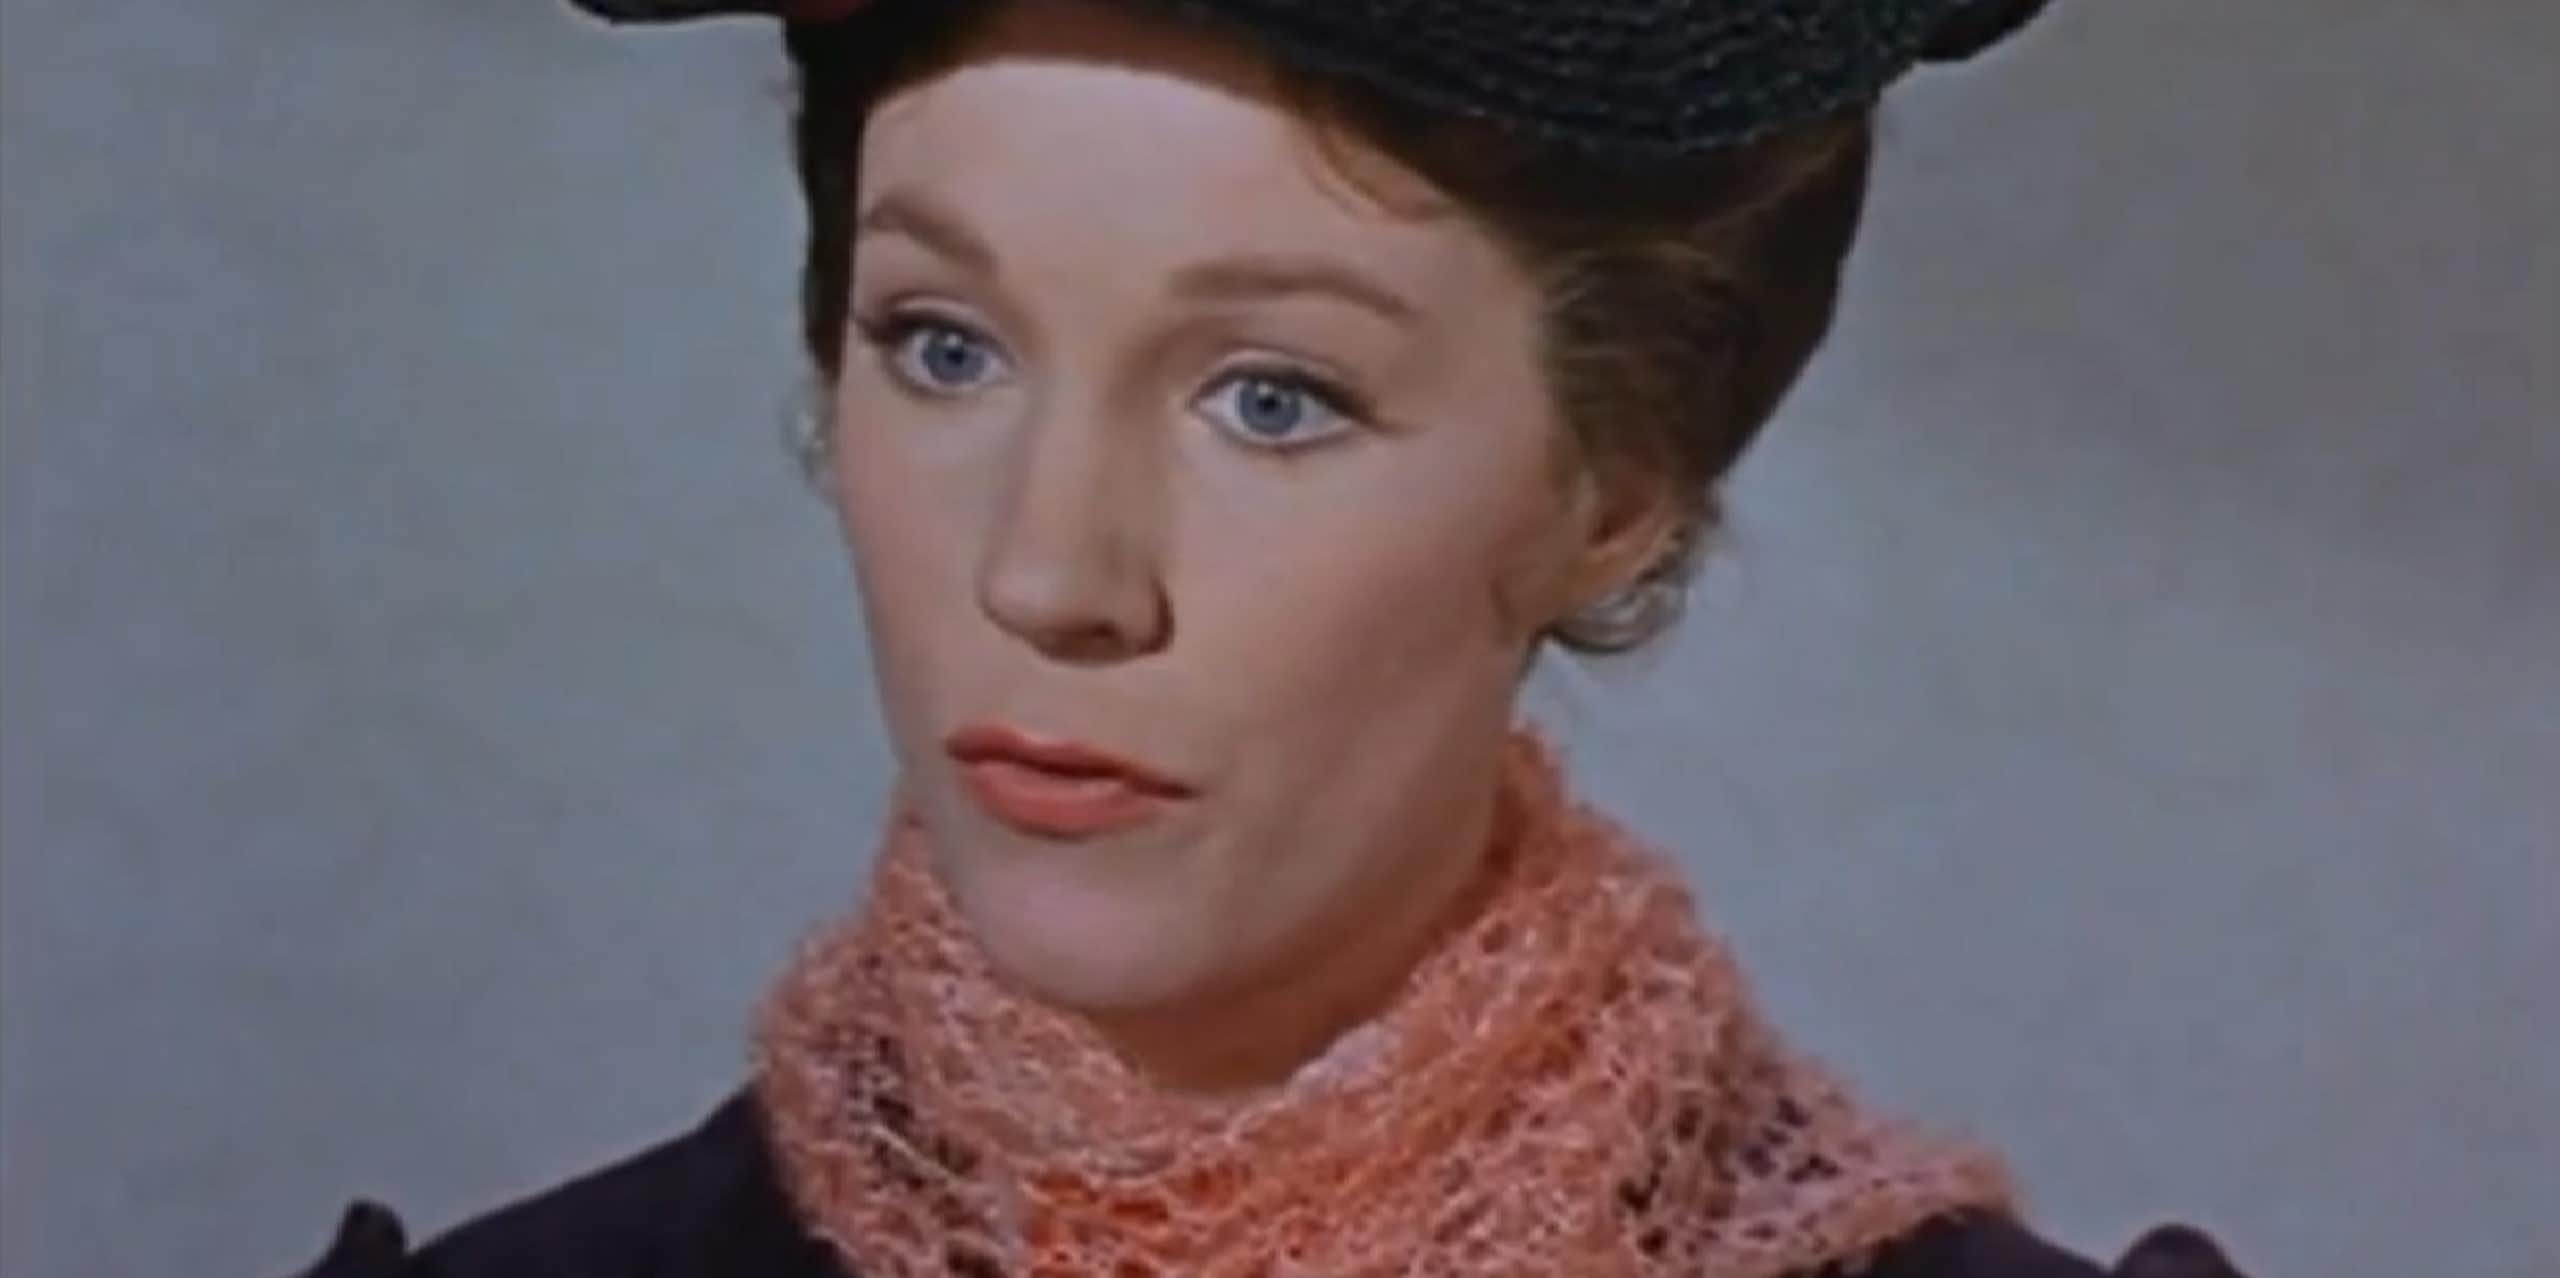 Mary Poppins, catedrática de economía